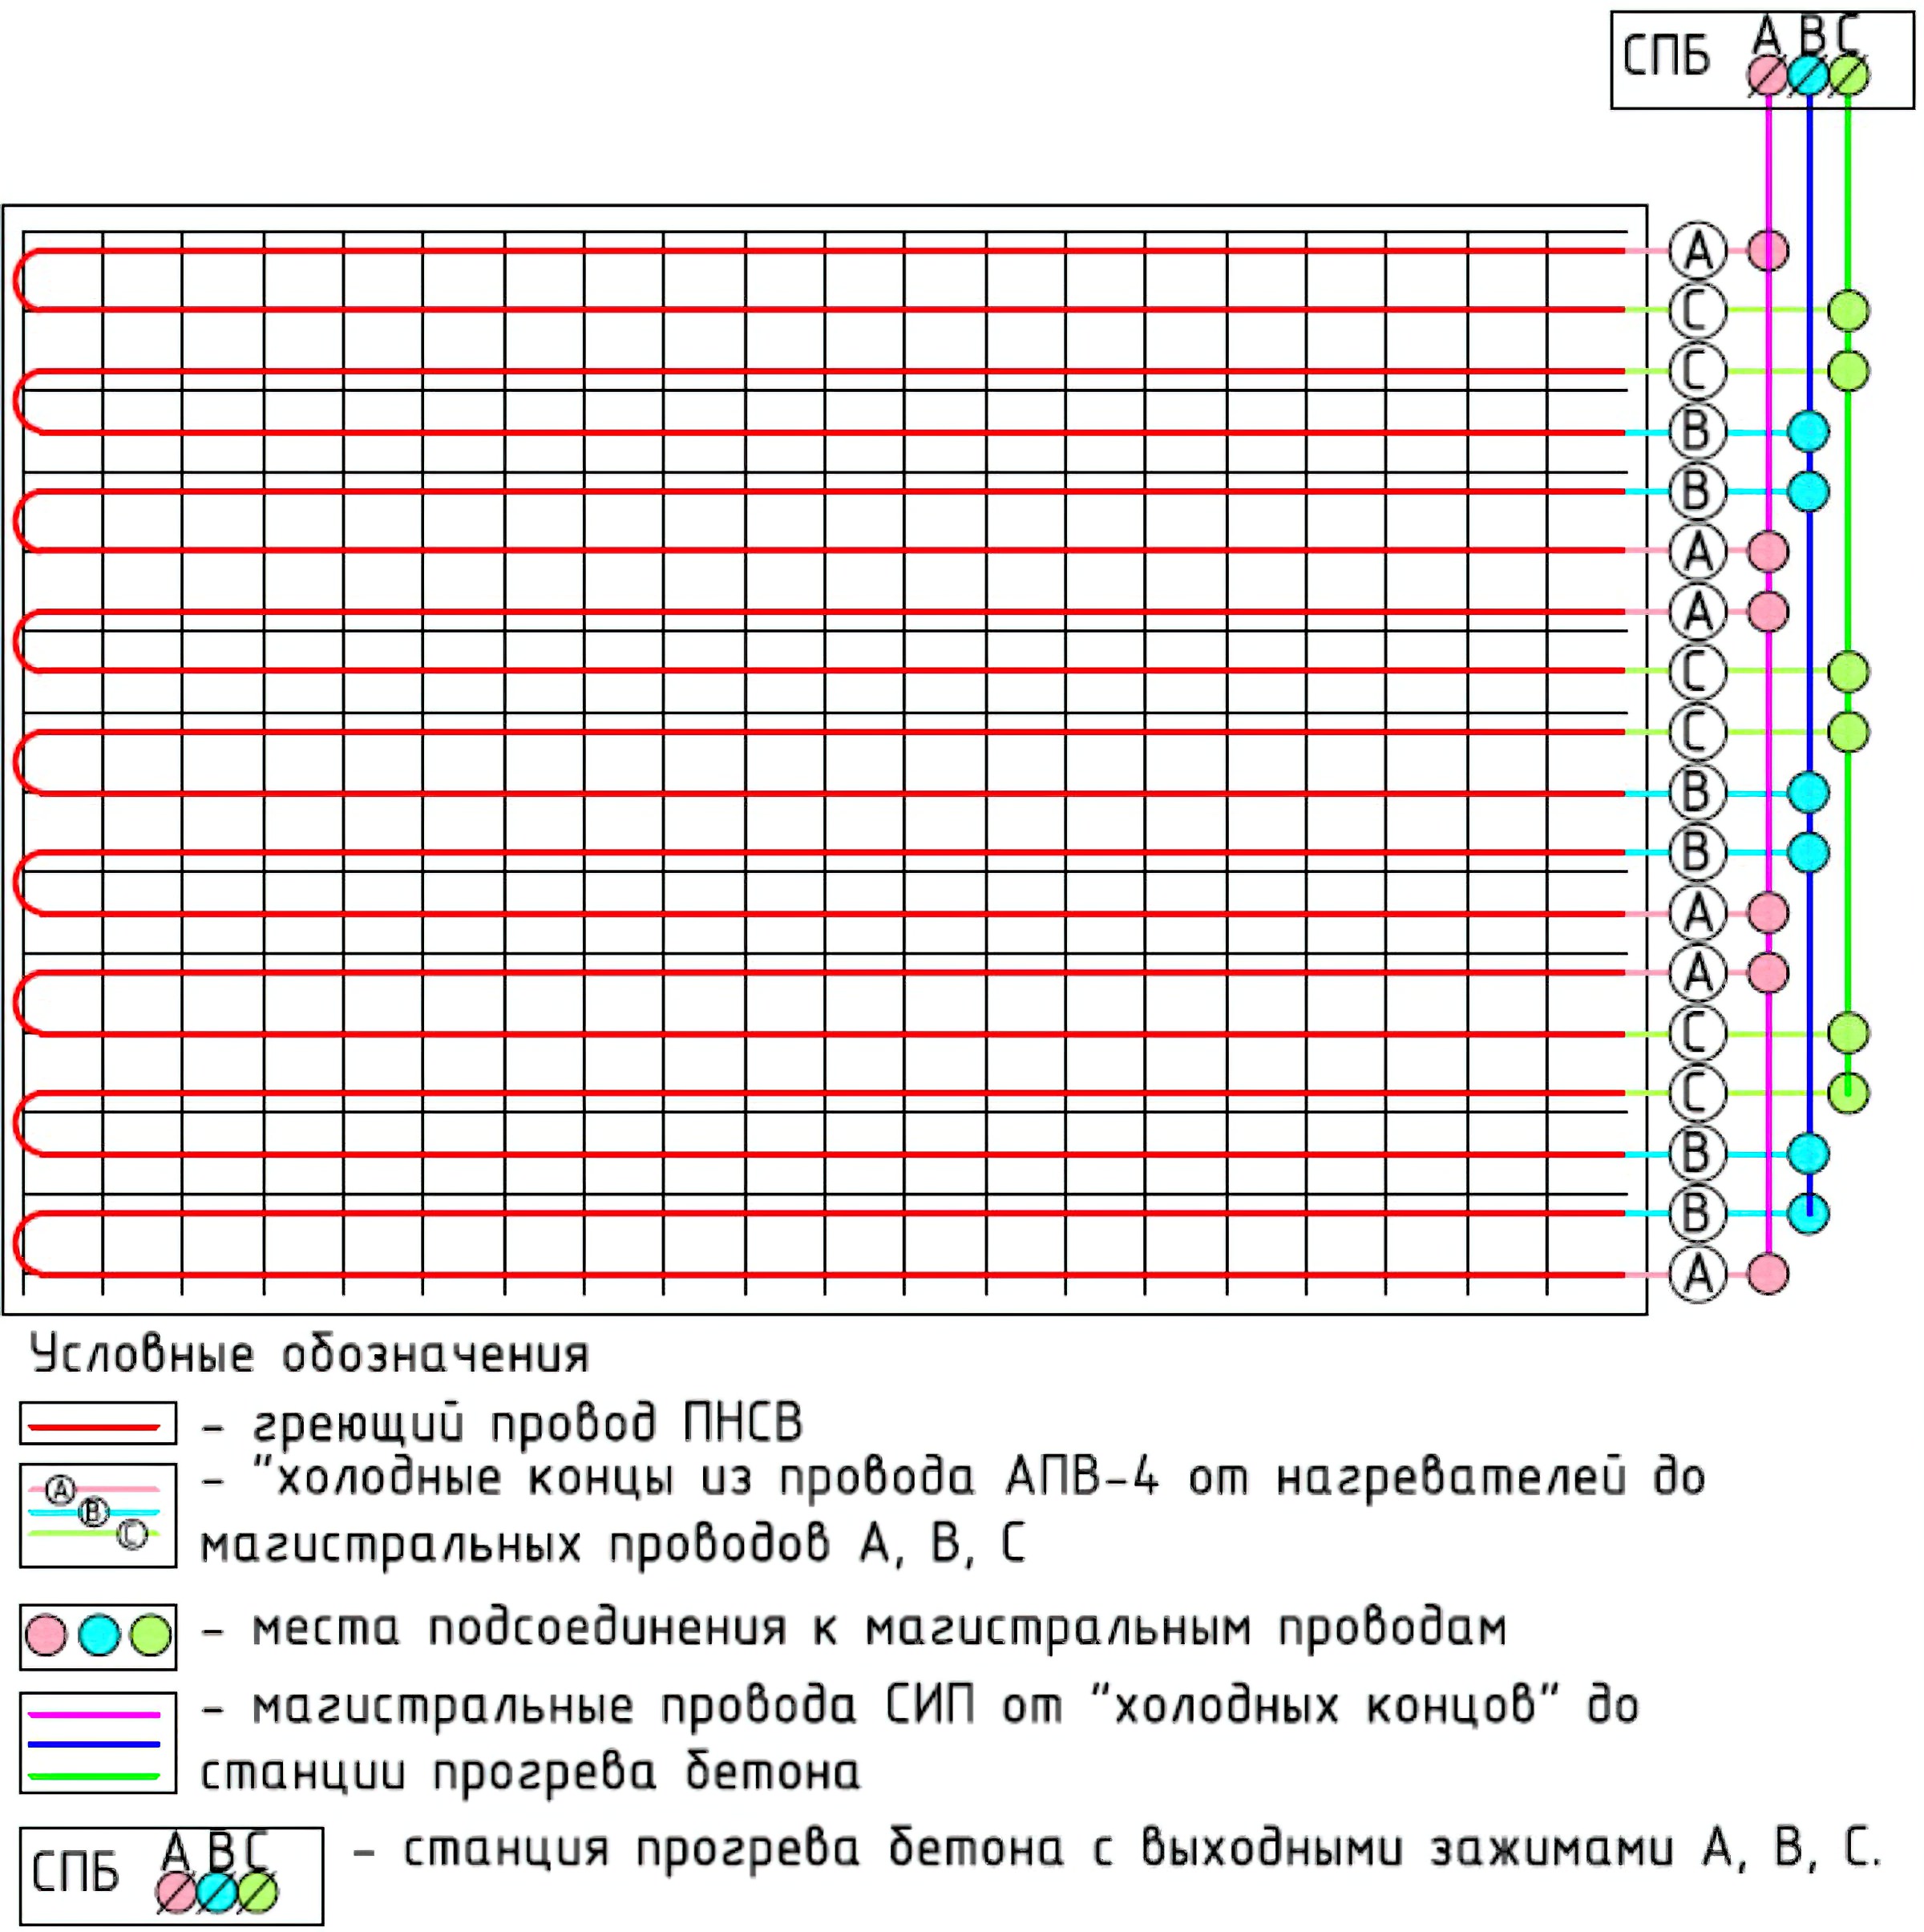 Провод ПНСВ 1.2 для прогрева бетона, чертеж и схема